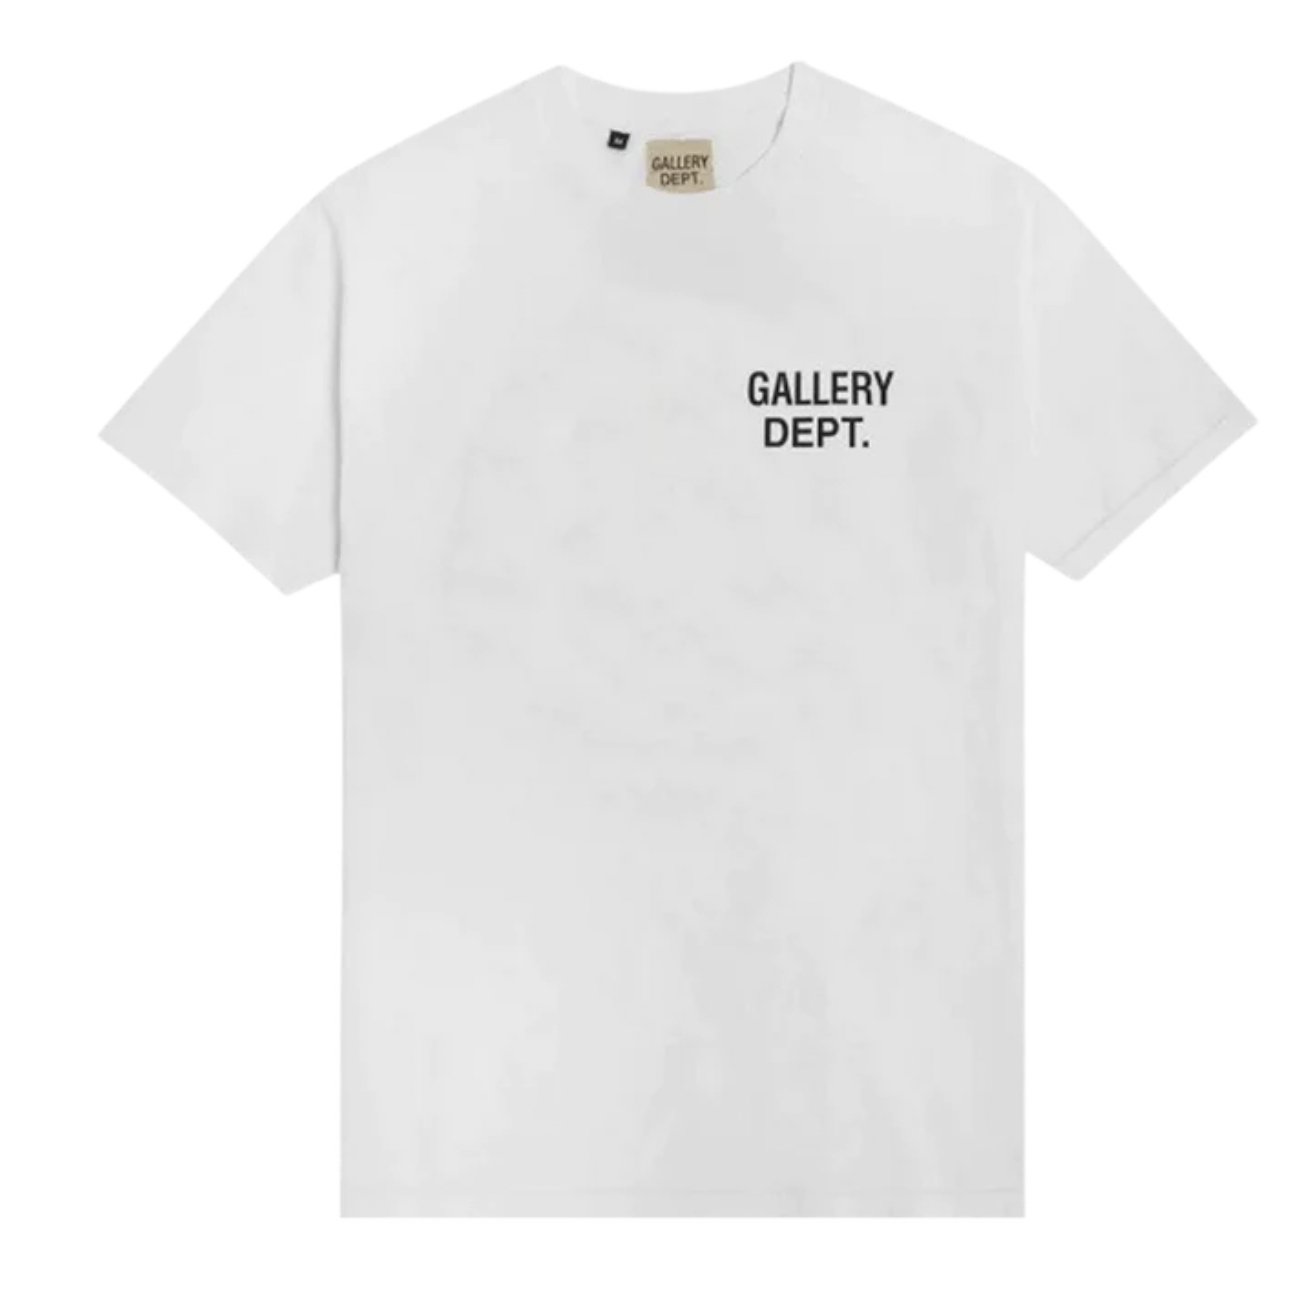 Gallery Dept. Souvenir T-Shirt White from GALLERY DEPT.